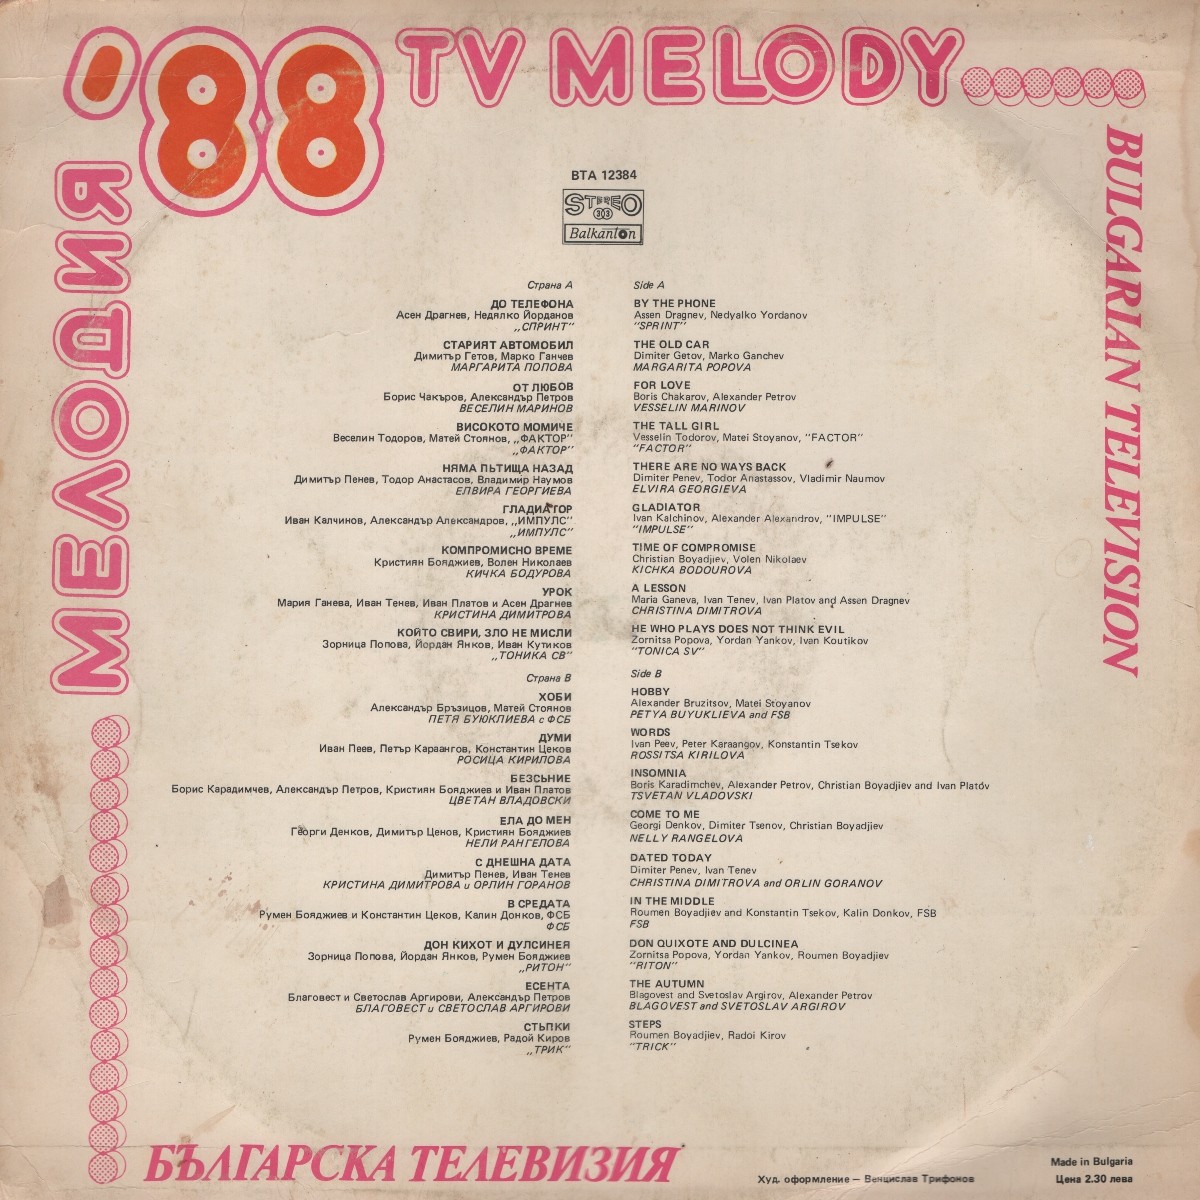 Българска телевизия. Мелодия '88